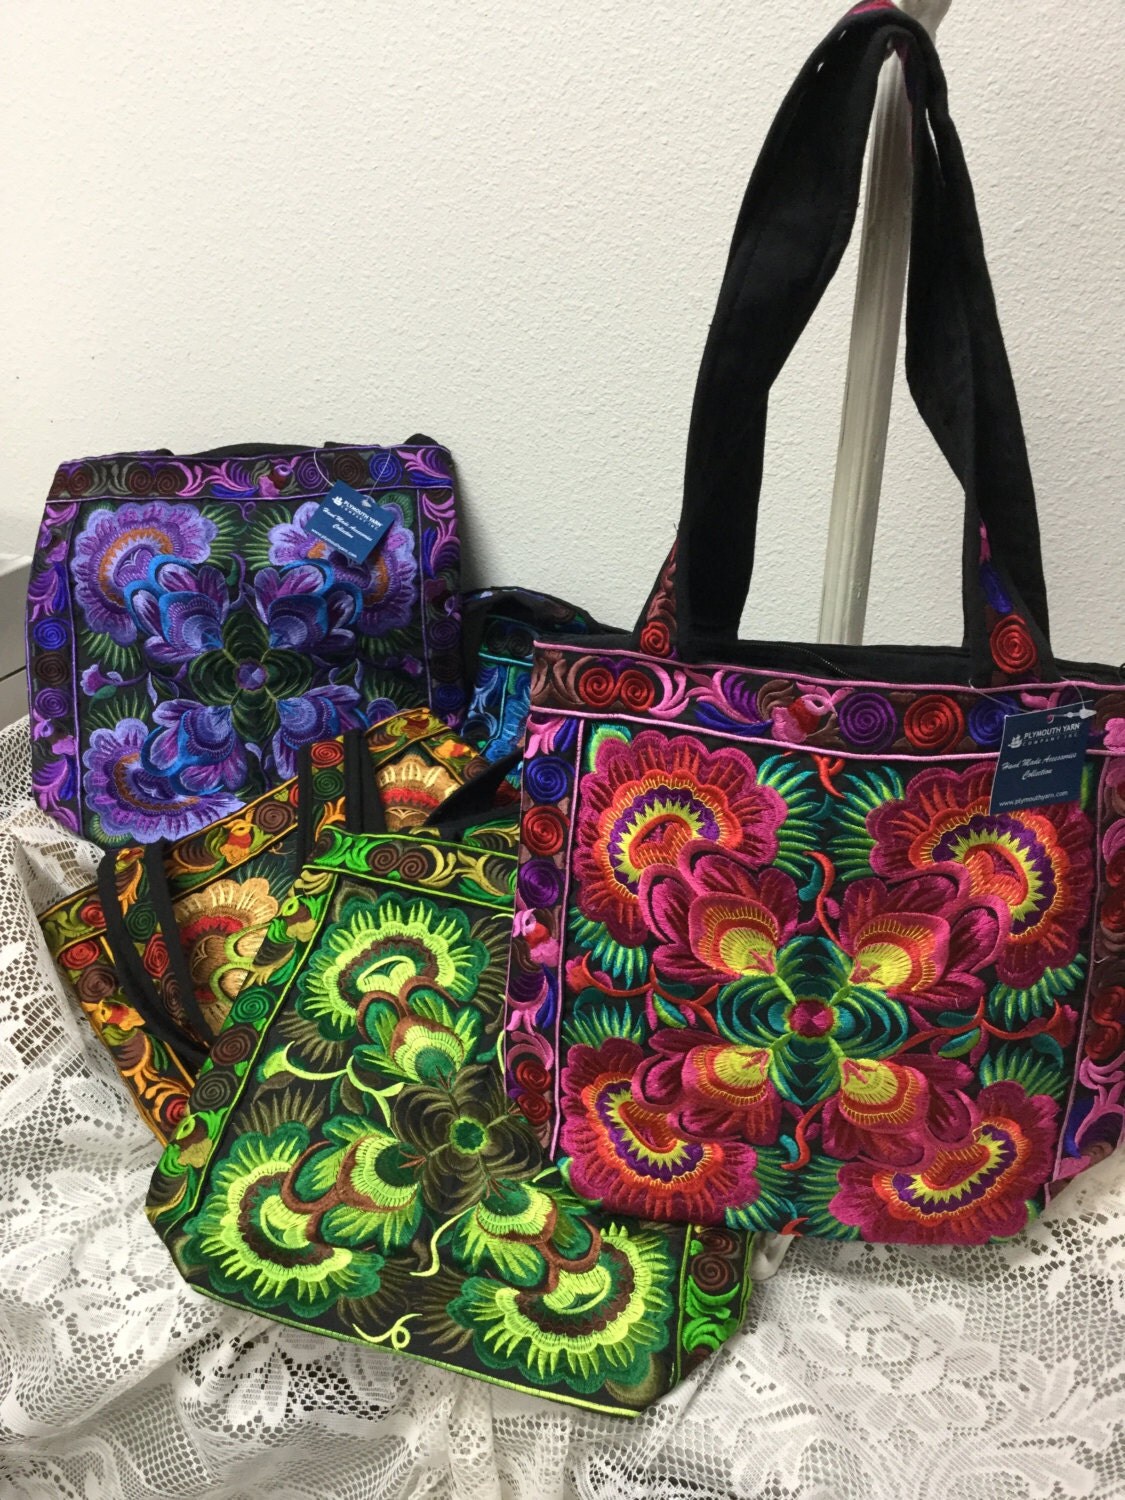 Beautiful Knitting/Crochet Bag from SandFOriginals on Etsy Studio